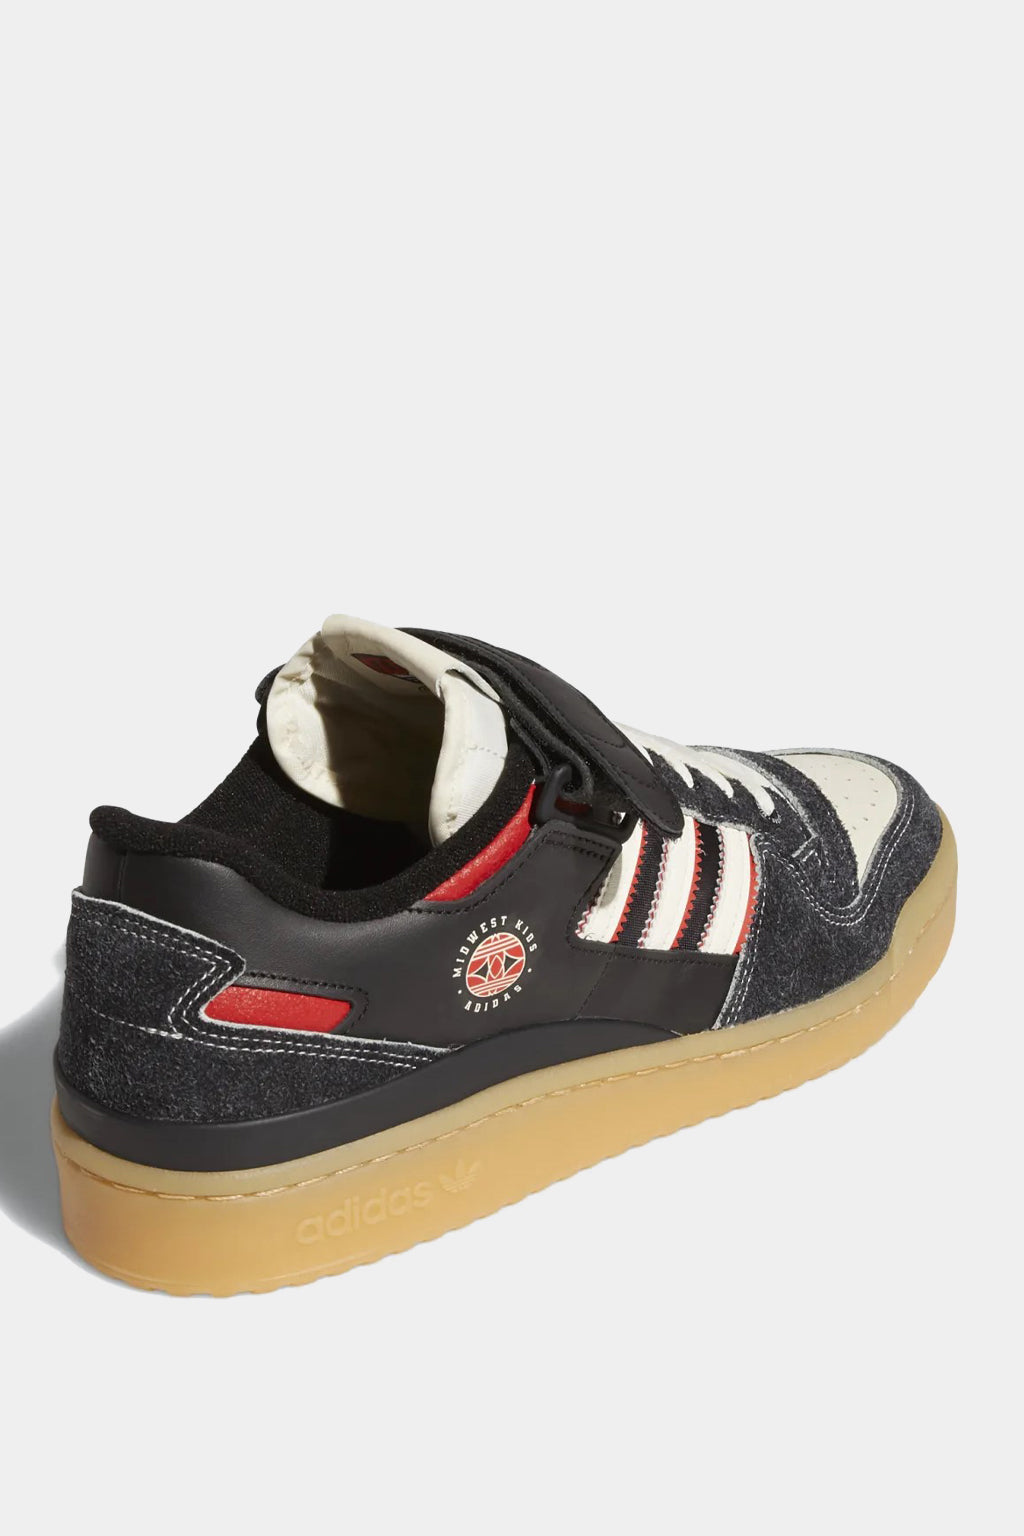 Adidas Originals - Forum 84 Low Midwest Kids Shoes